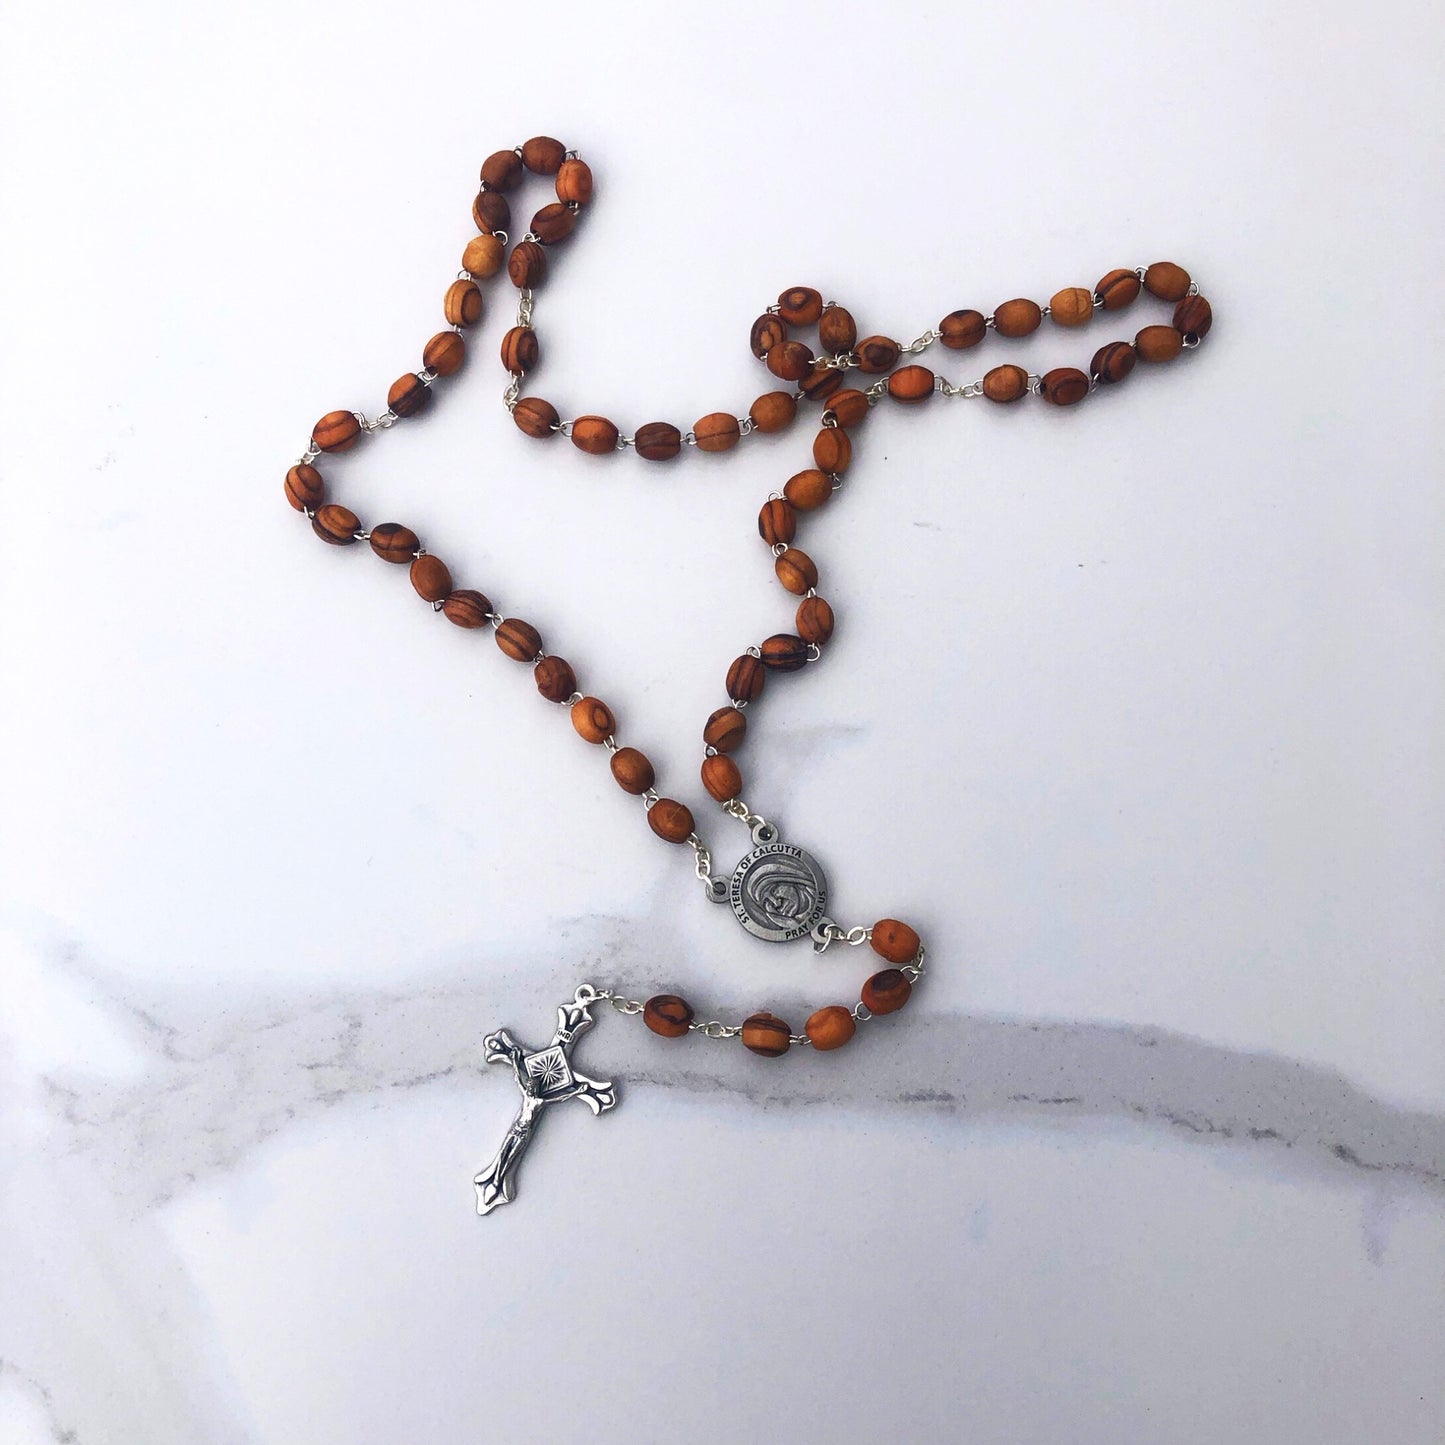 Rosary Beads: St Teresa of Calcutta